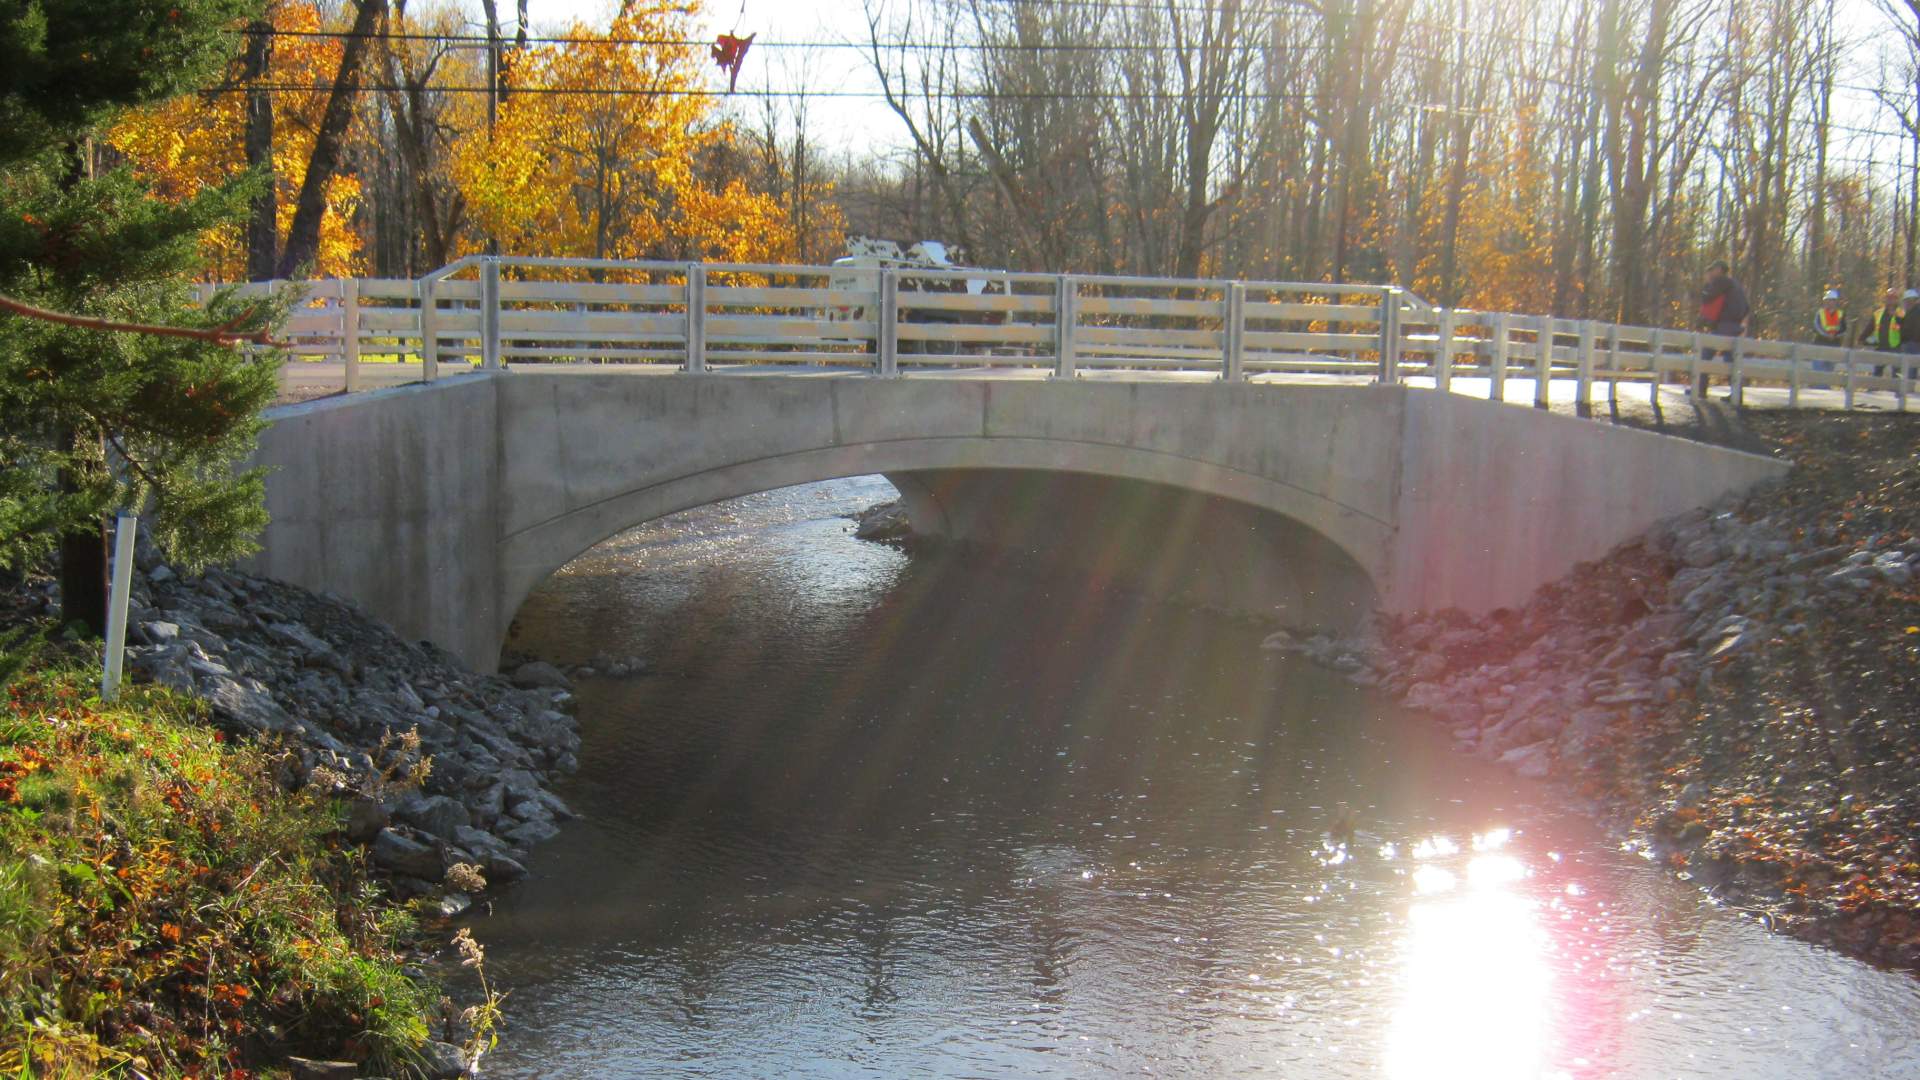 Alden-Crittenden Road Bridge over Spring Brook